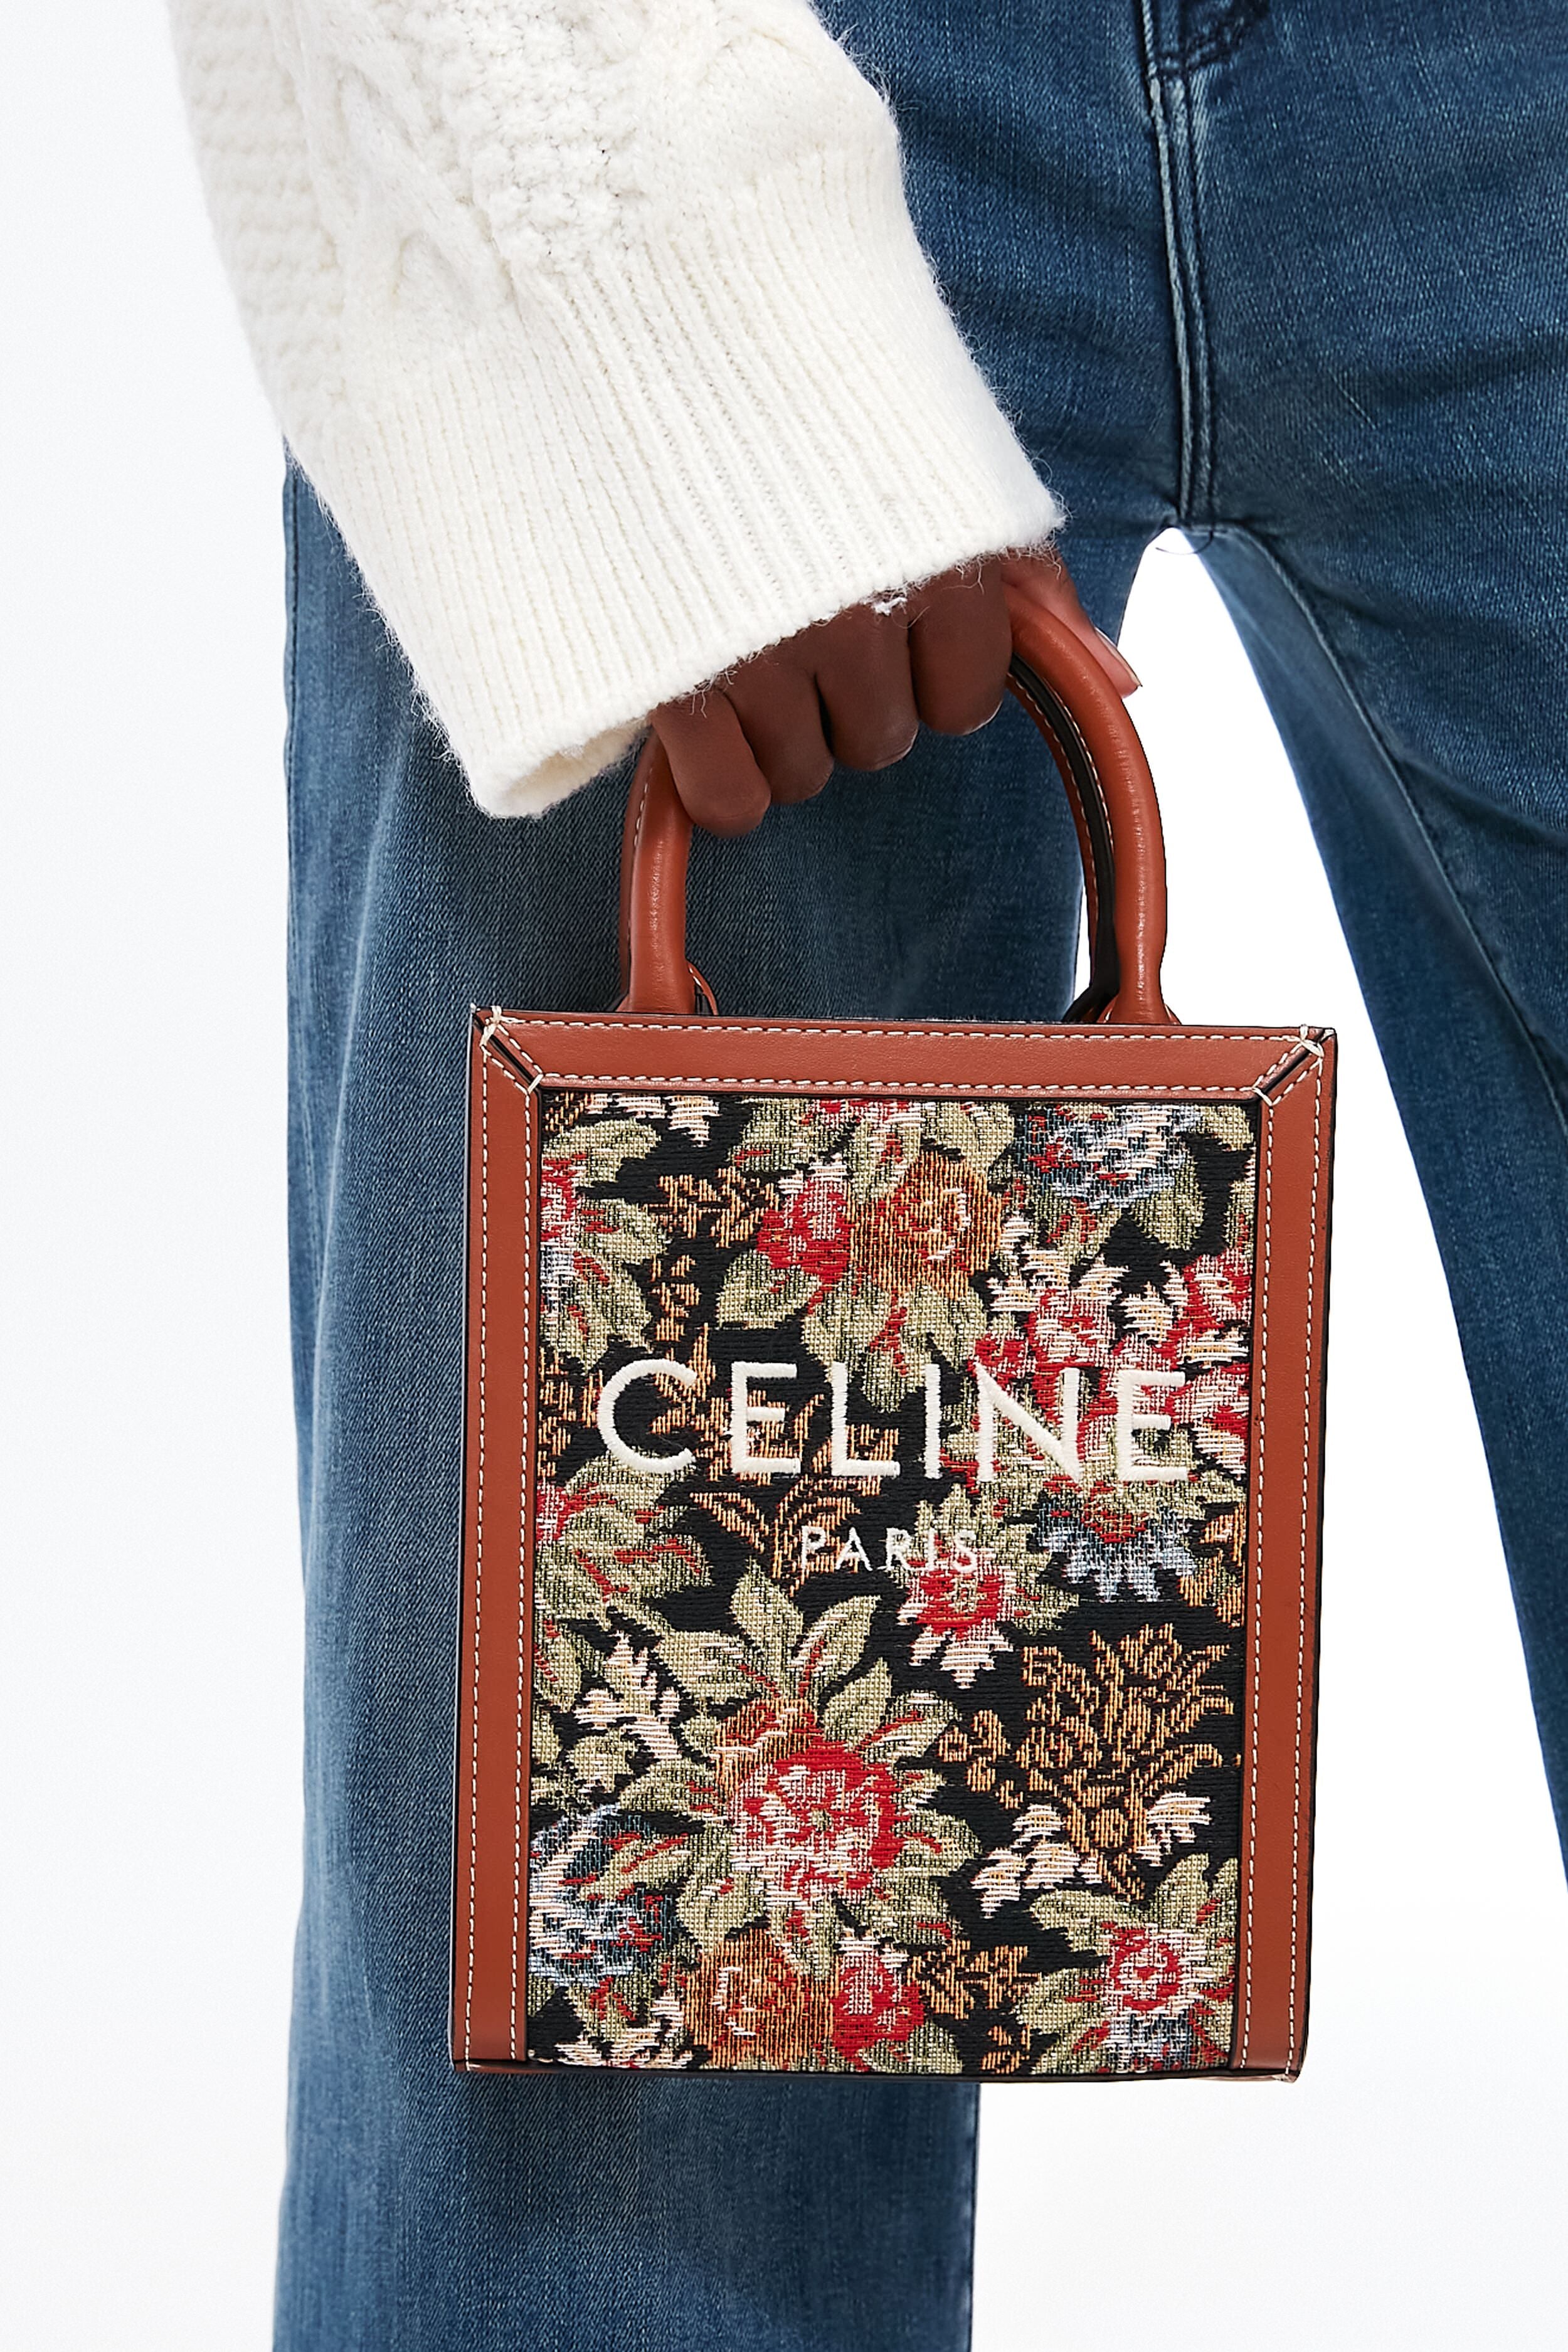 Mini Vertical Cabas Celine In Denim With Celine All-Over Print